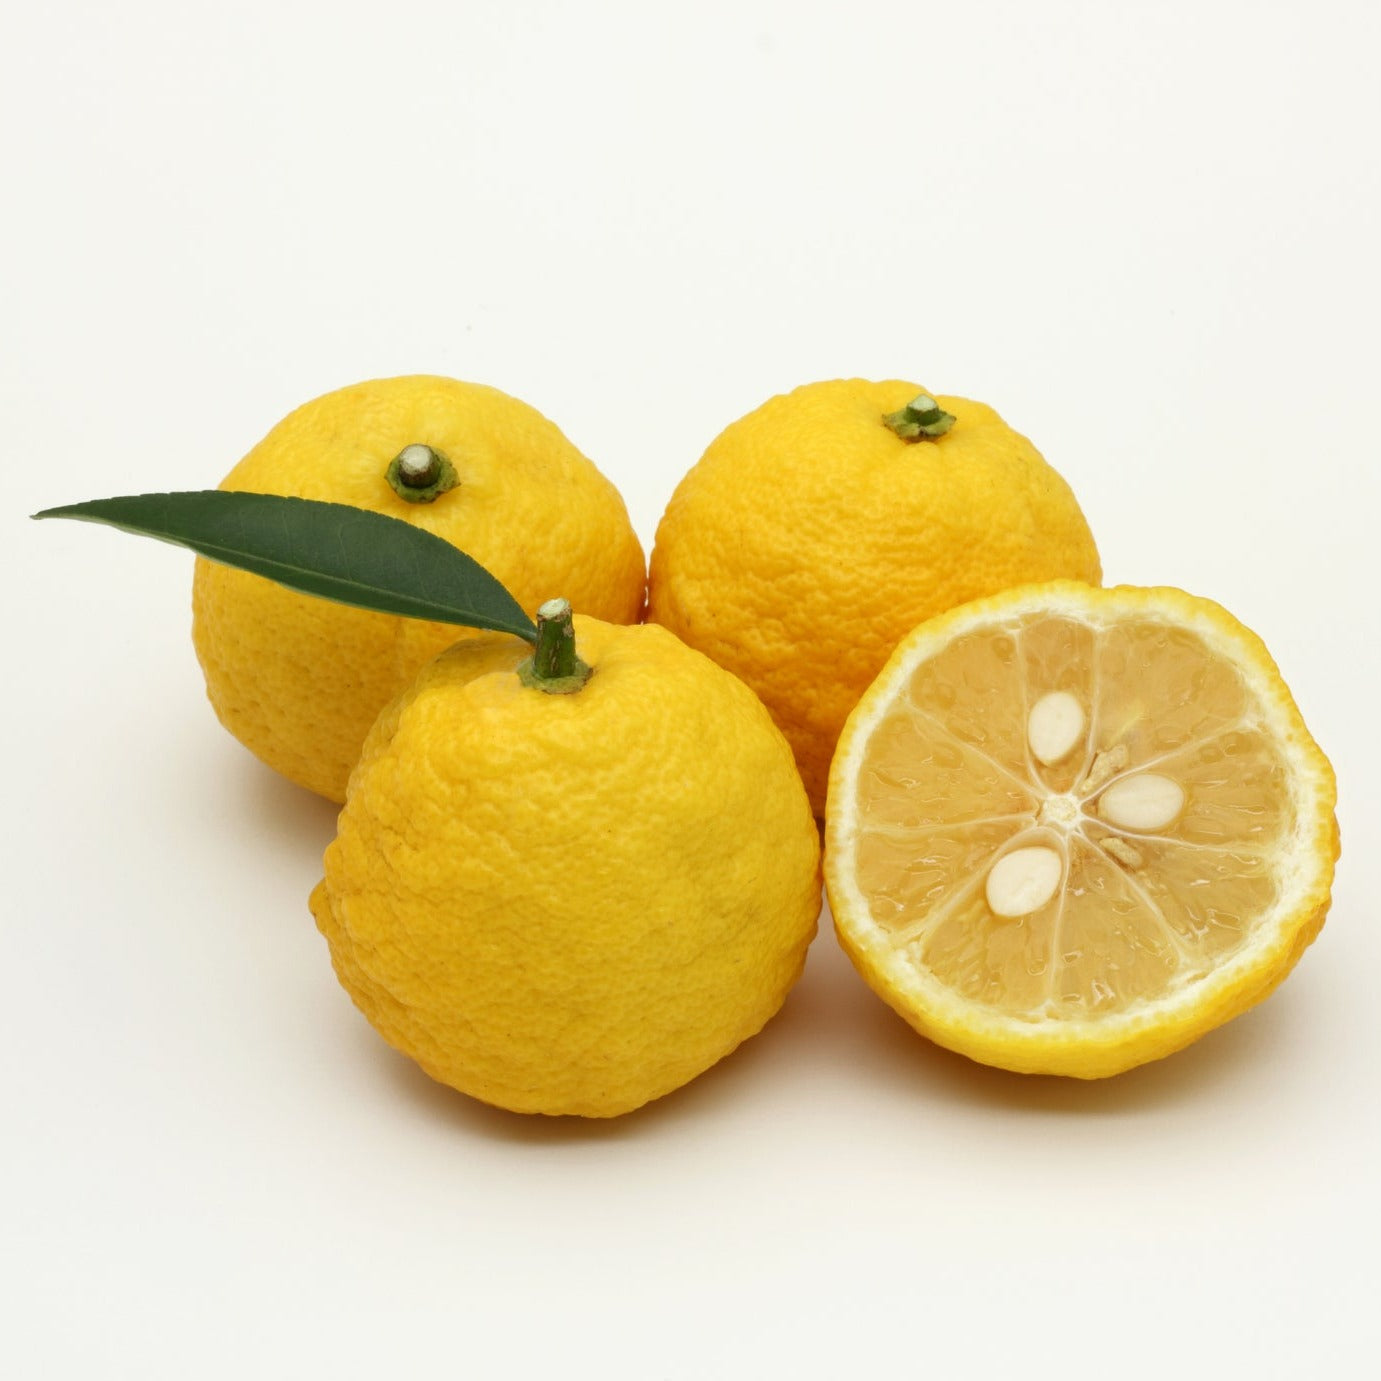 Yuzu Lemon Grafted & Mature Plant